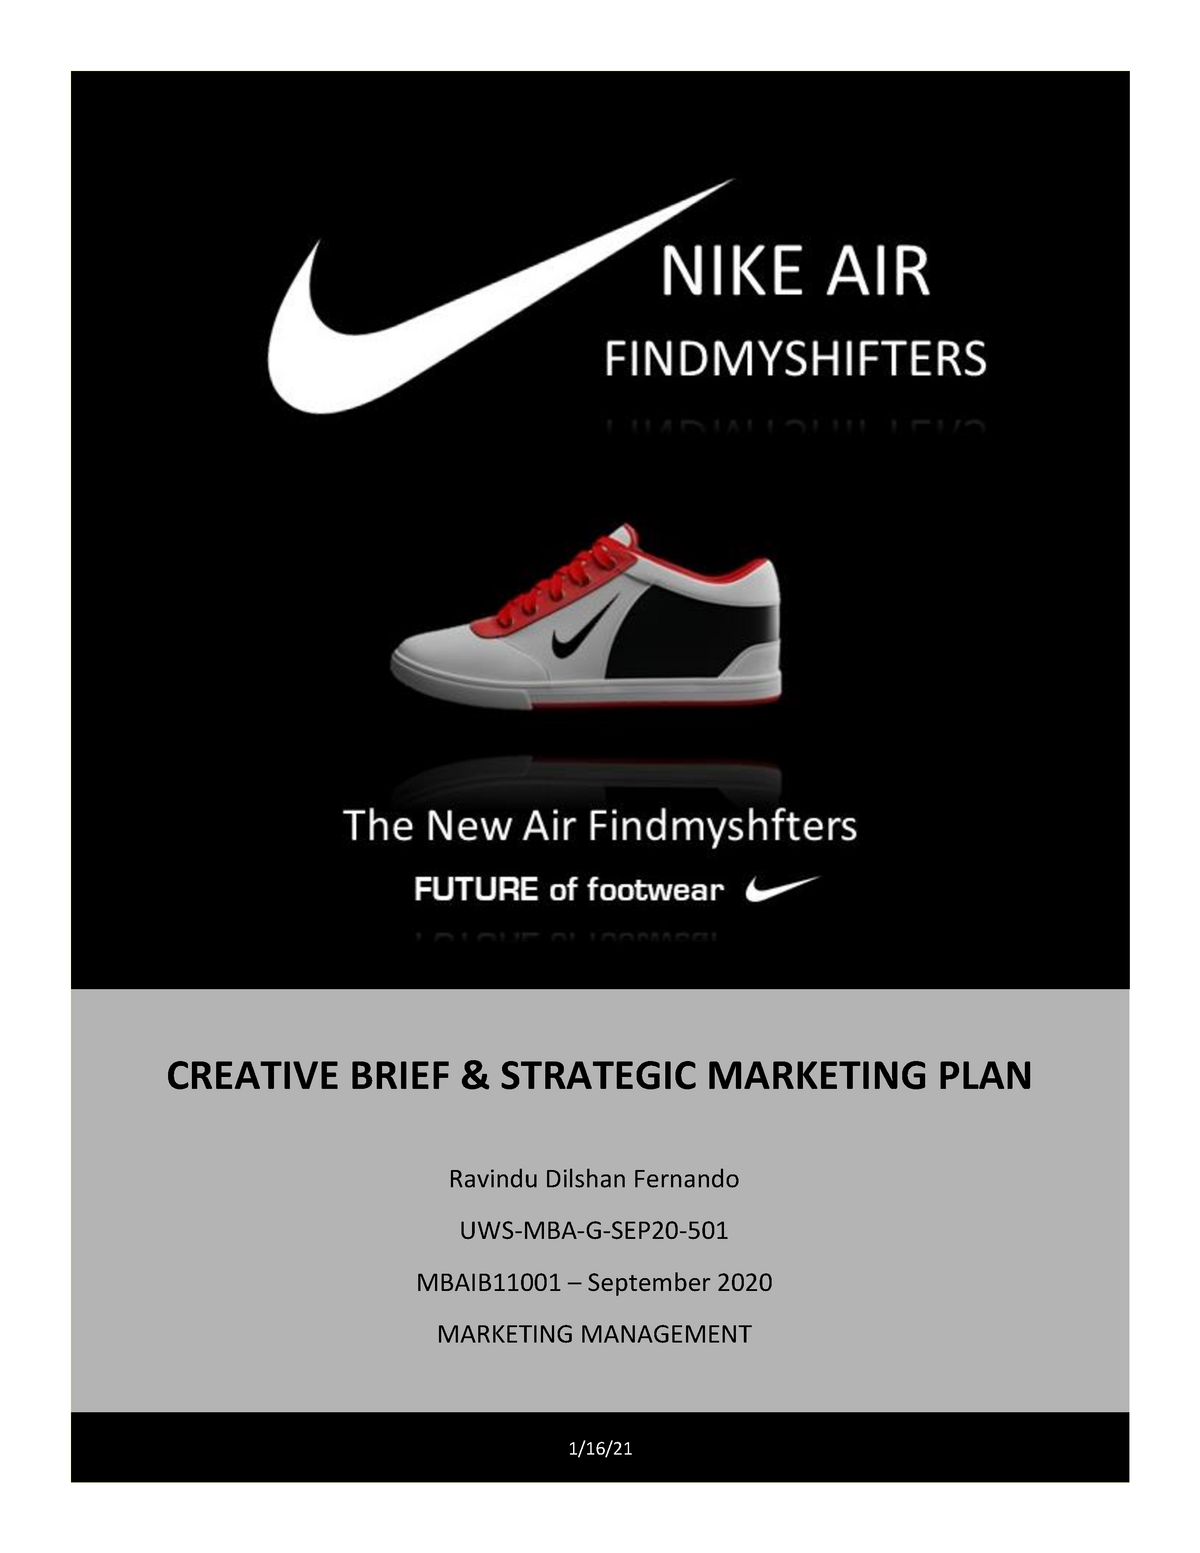 desconocido personal Sada Markerting plan Nike - 0 | P a g e Ravindu Fernando - MBAIB1001 – Marketing  Management 1/16/ - Studocu